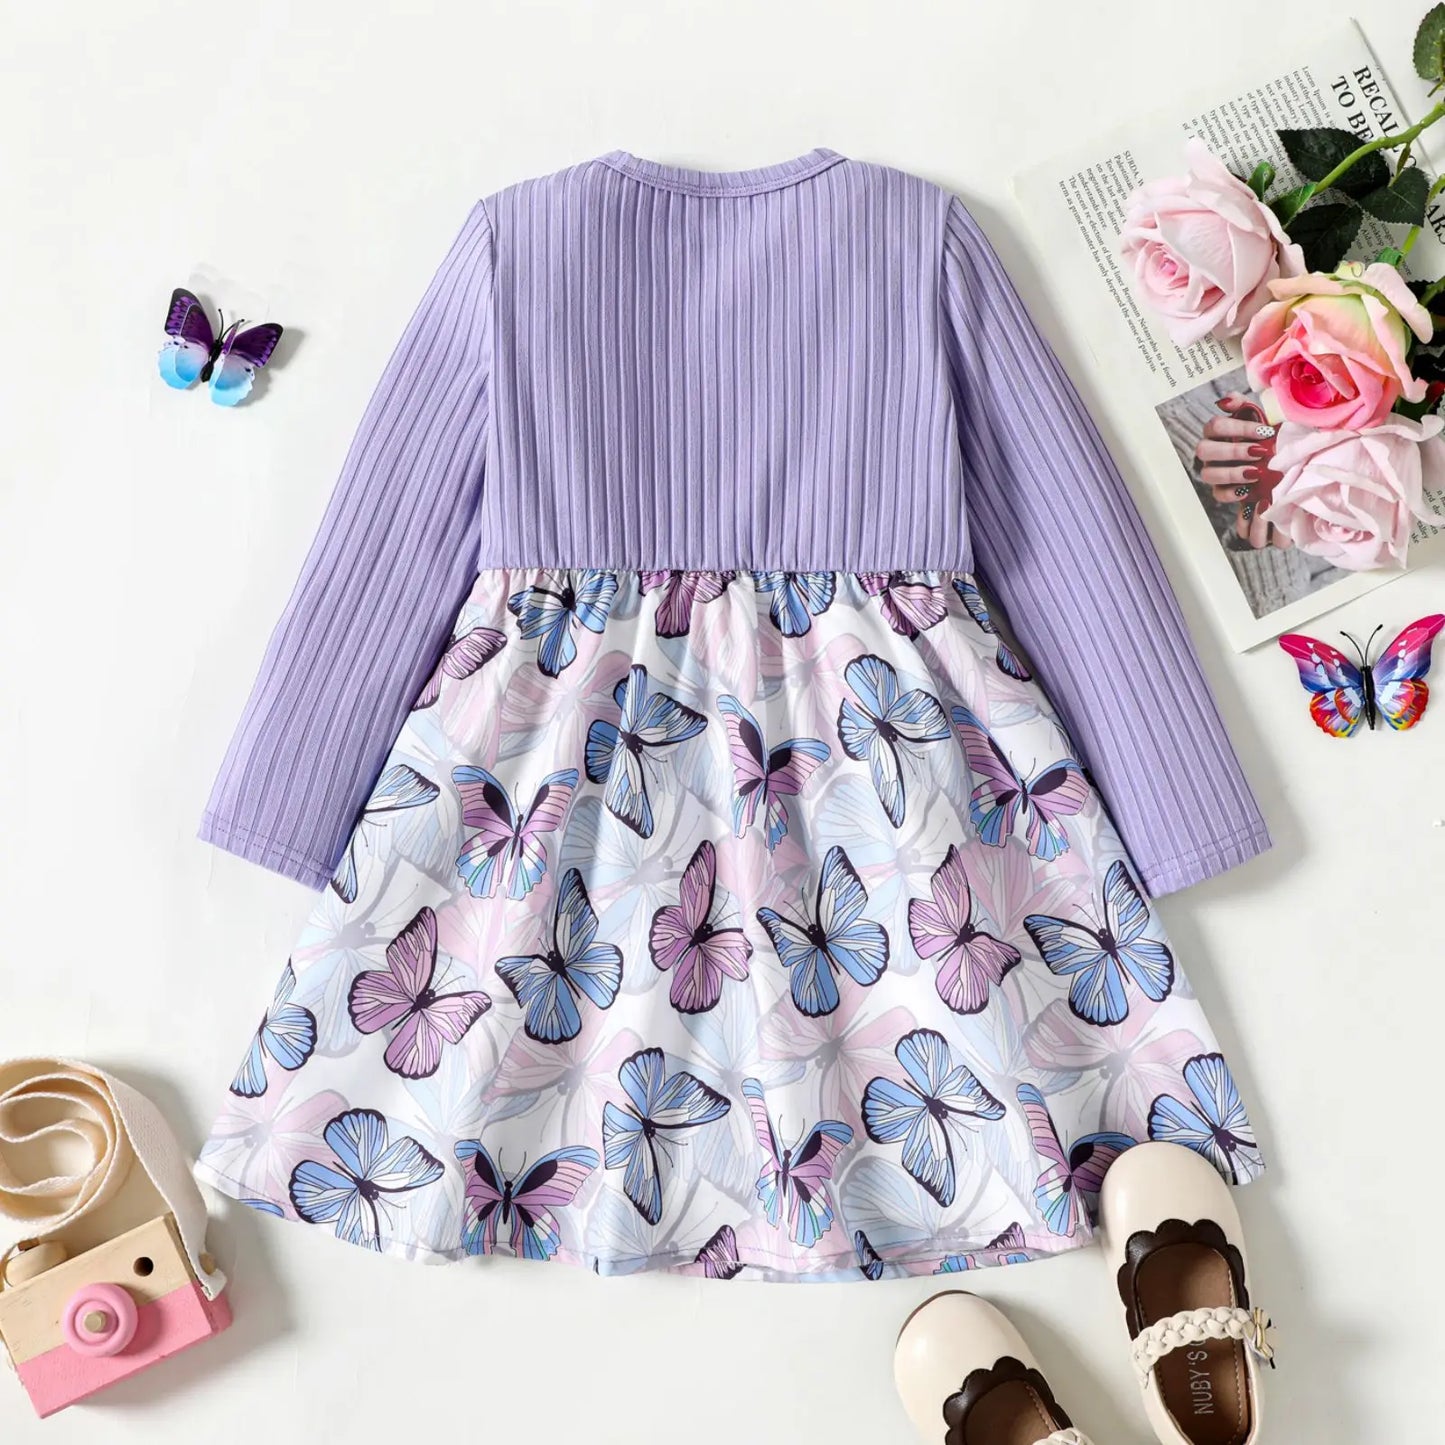 PatPat Toddler Girl Dress Ribbed Bowknot Design Floral